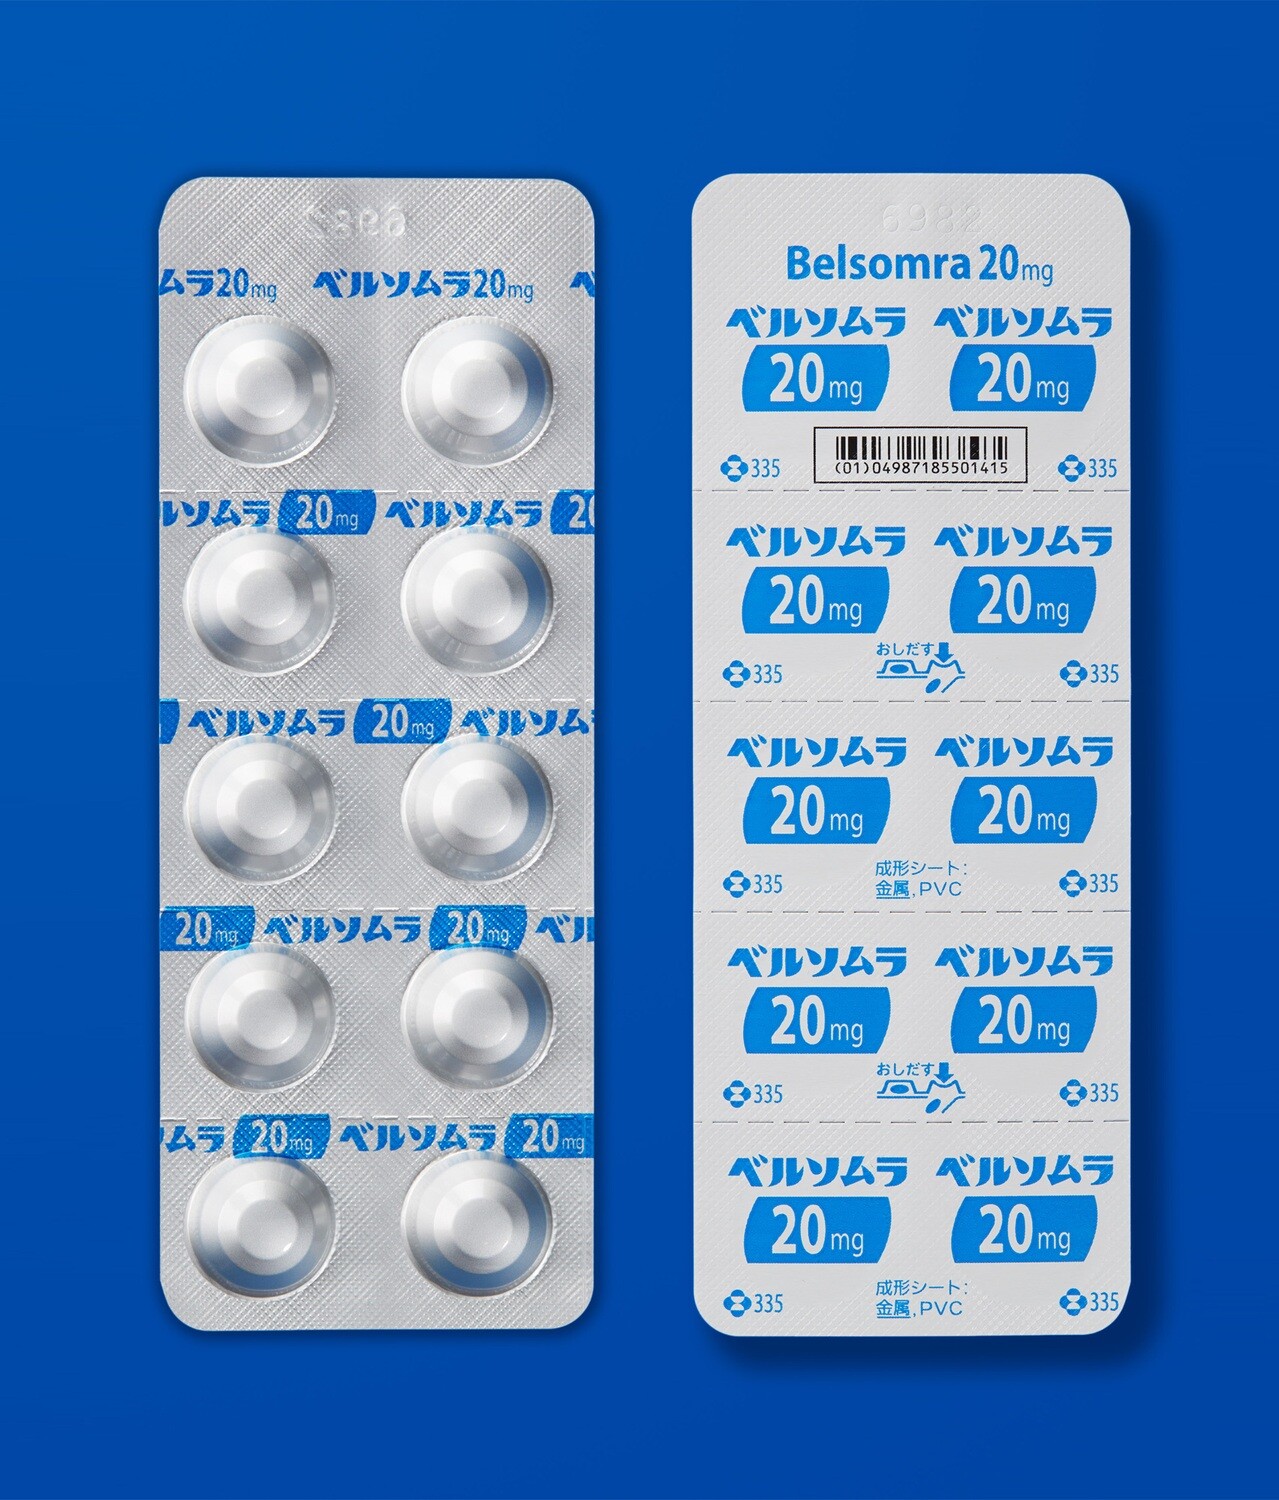 Belsomra Tablets 20mg